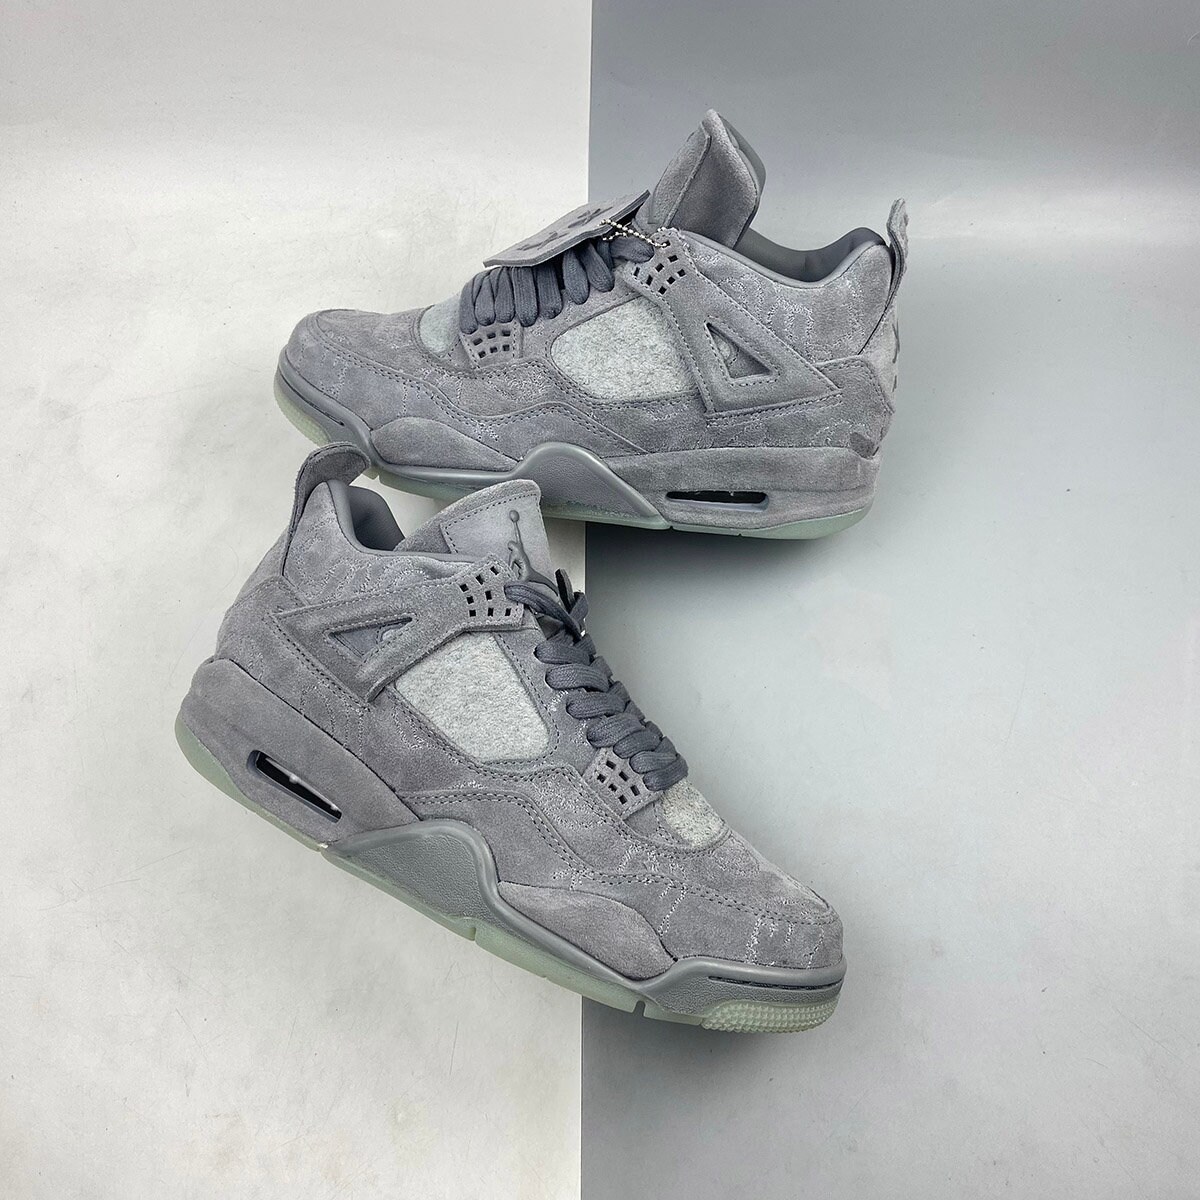 KAWS X Jordan 4 Grey Suede Sneaker for Men and Women Best - Etsy